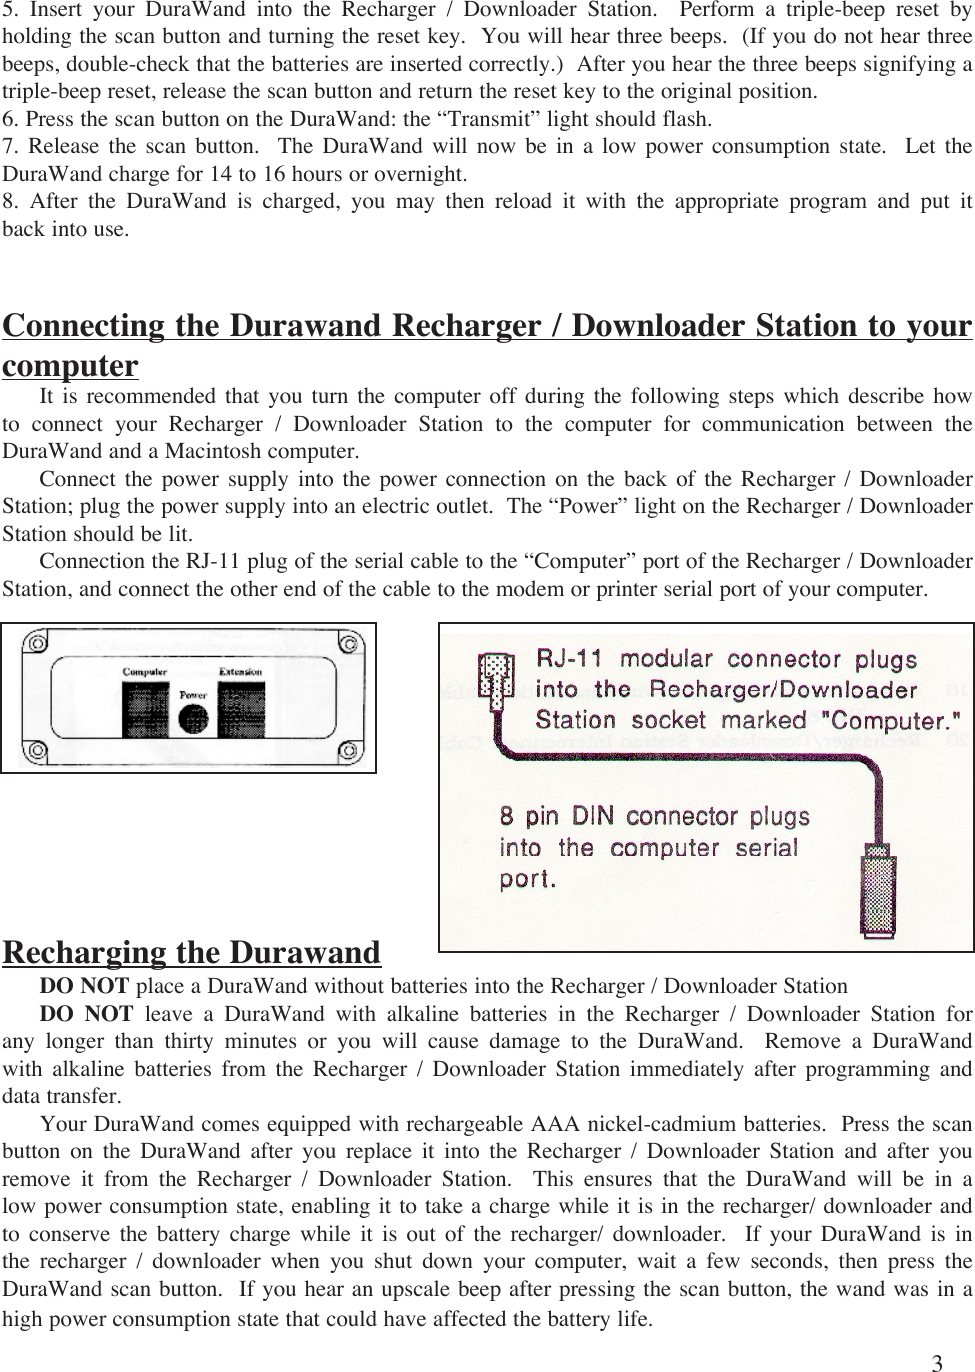 Page 4 of 8 - Keyspan Keyspan-Alexadria-Durawand-Portable-Scanner-Users-Manual--2  Keyspan-alexadria-durawand-portable-scanner-users-manual